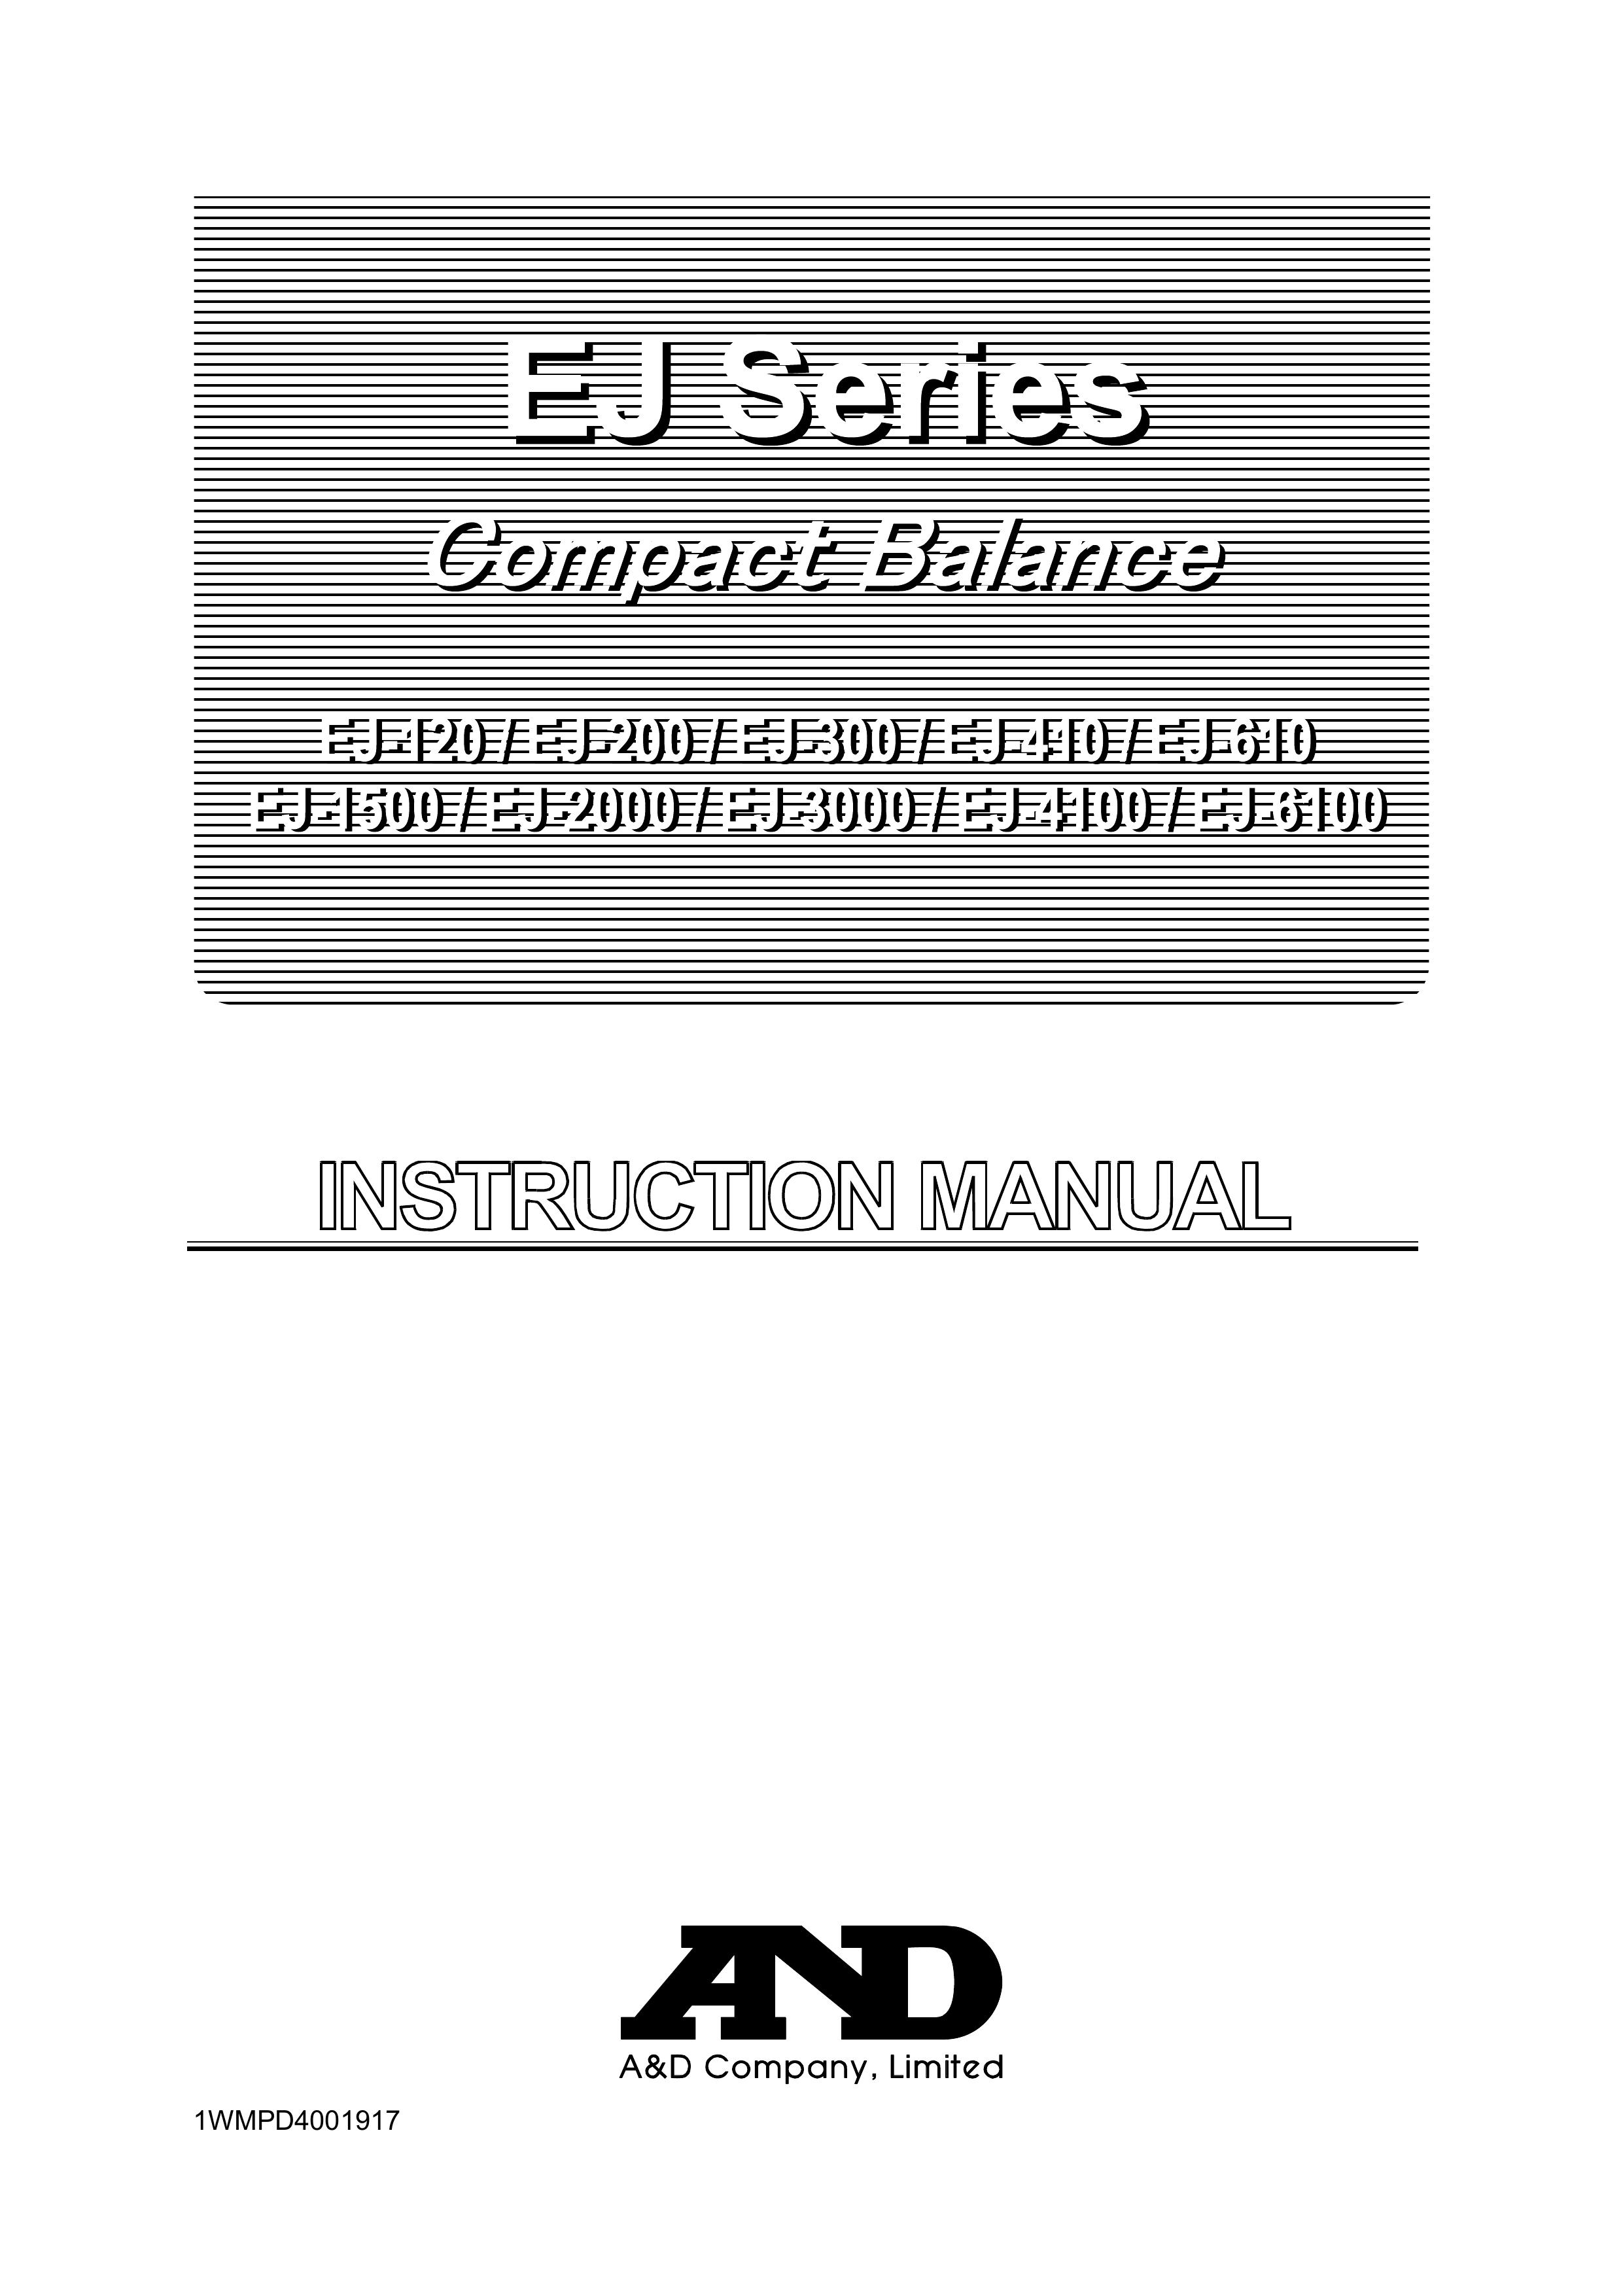 A&D EJ-610 Scale User Manual